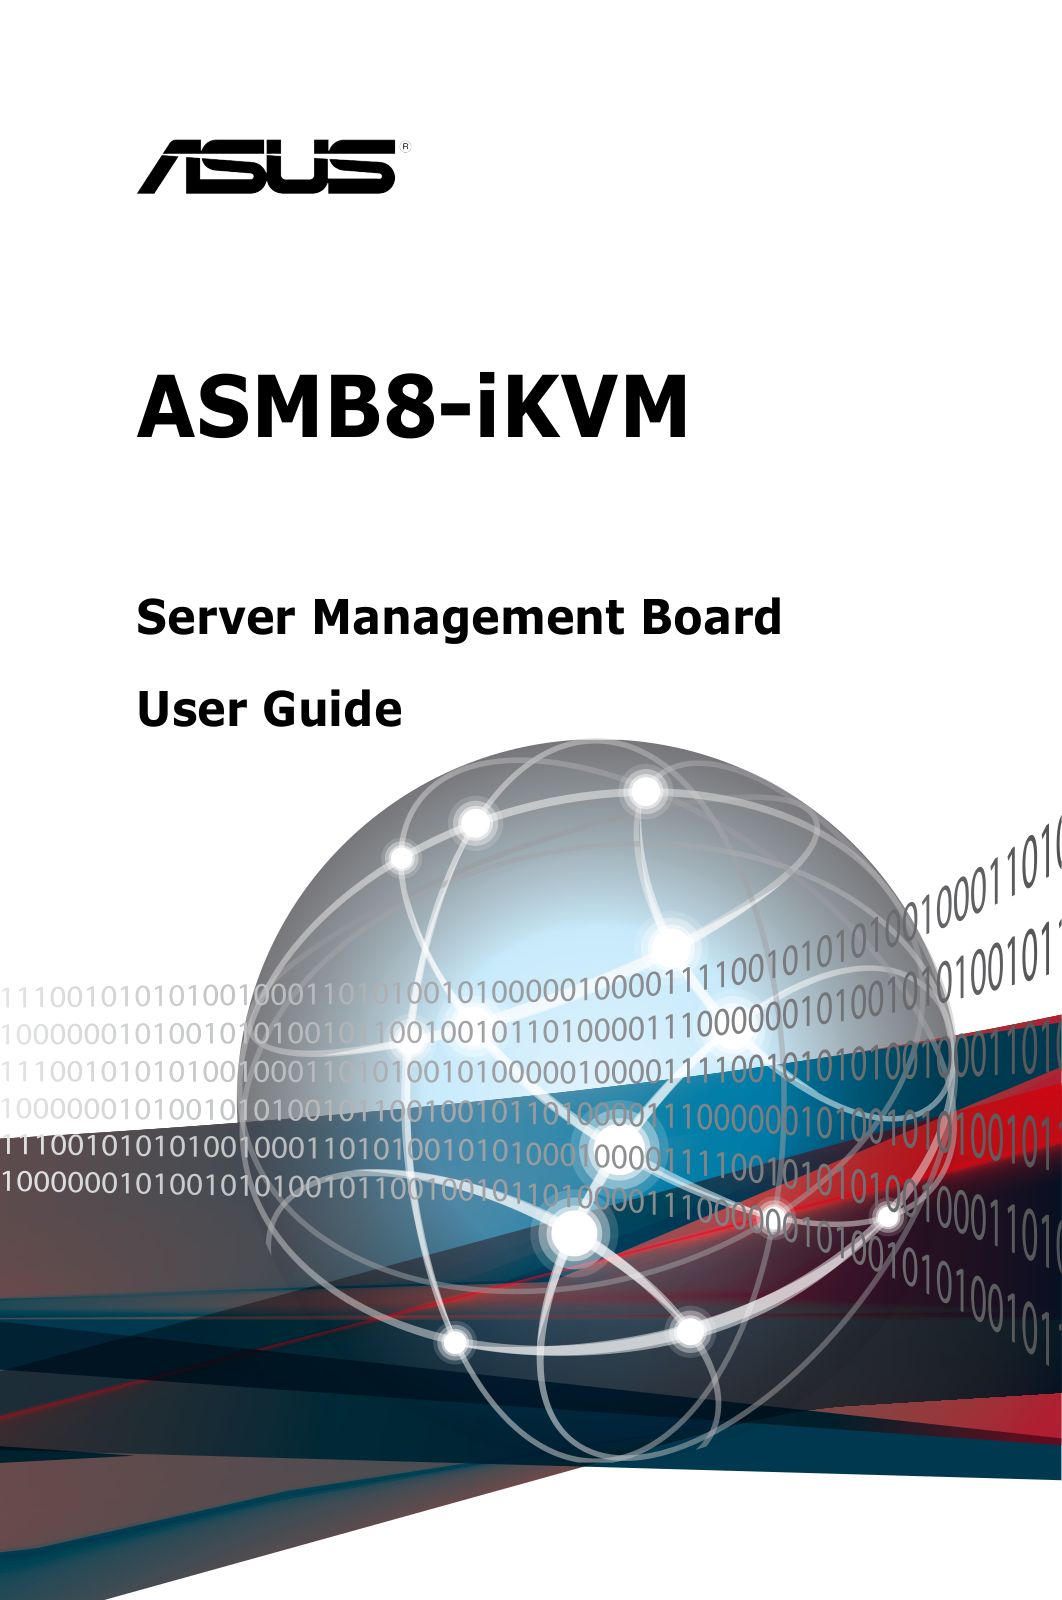 ASUS ASMB8-iKVM operation manual